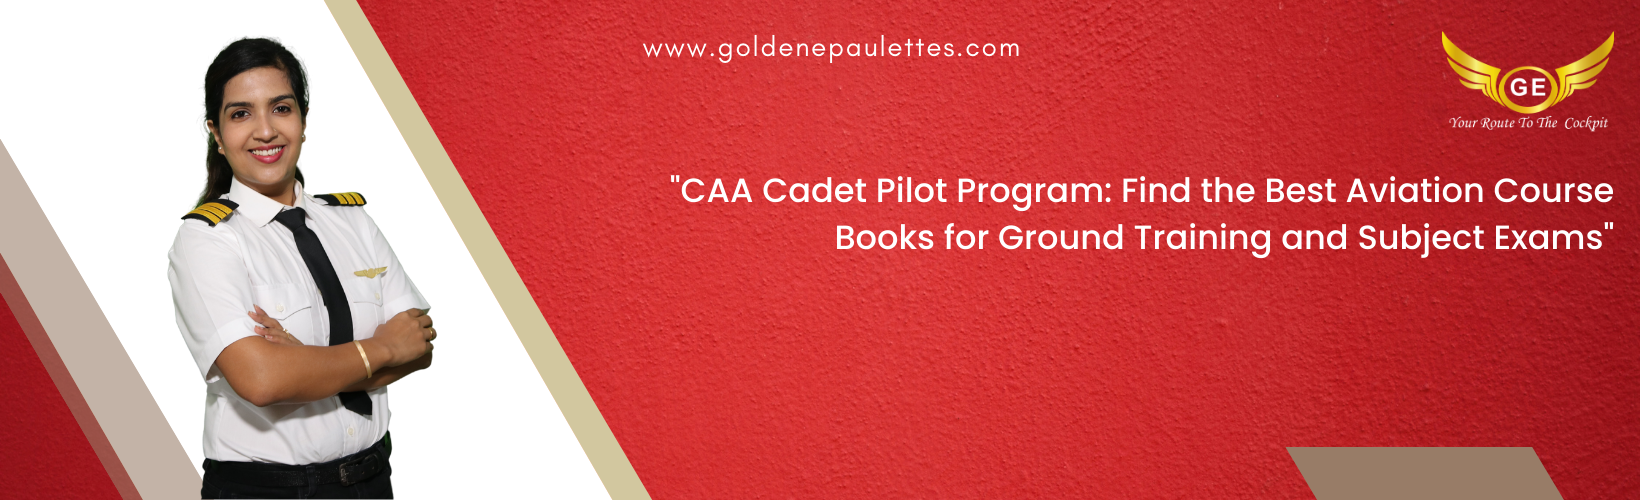 Aviation Course Books for the CAA Cadet Pilot Program